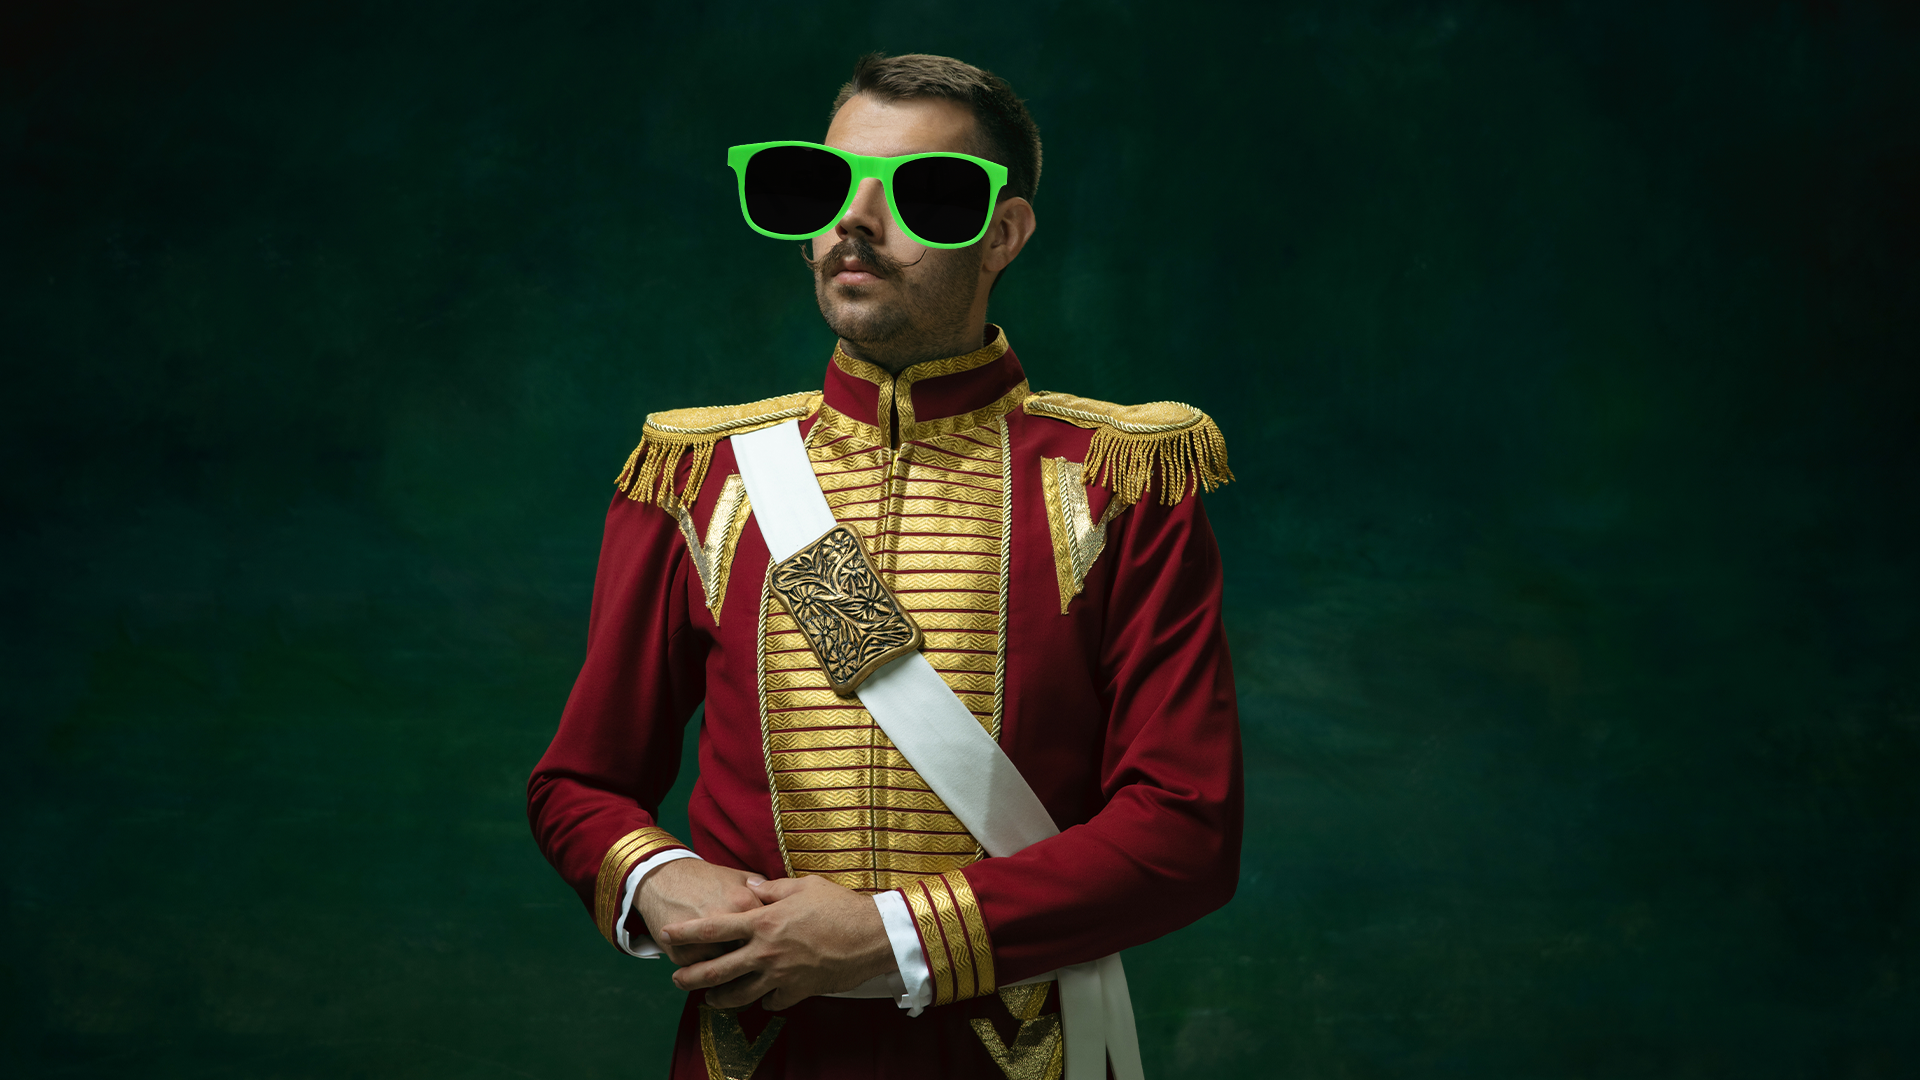 Royal man in sunglasses on dark background